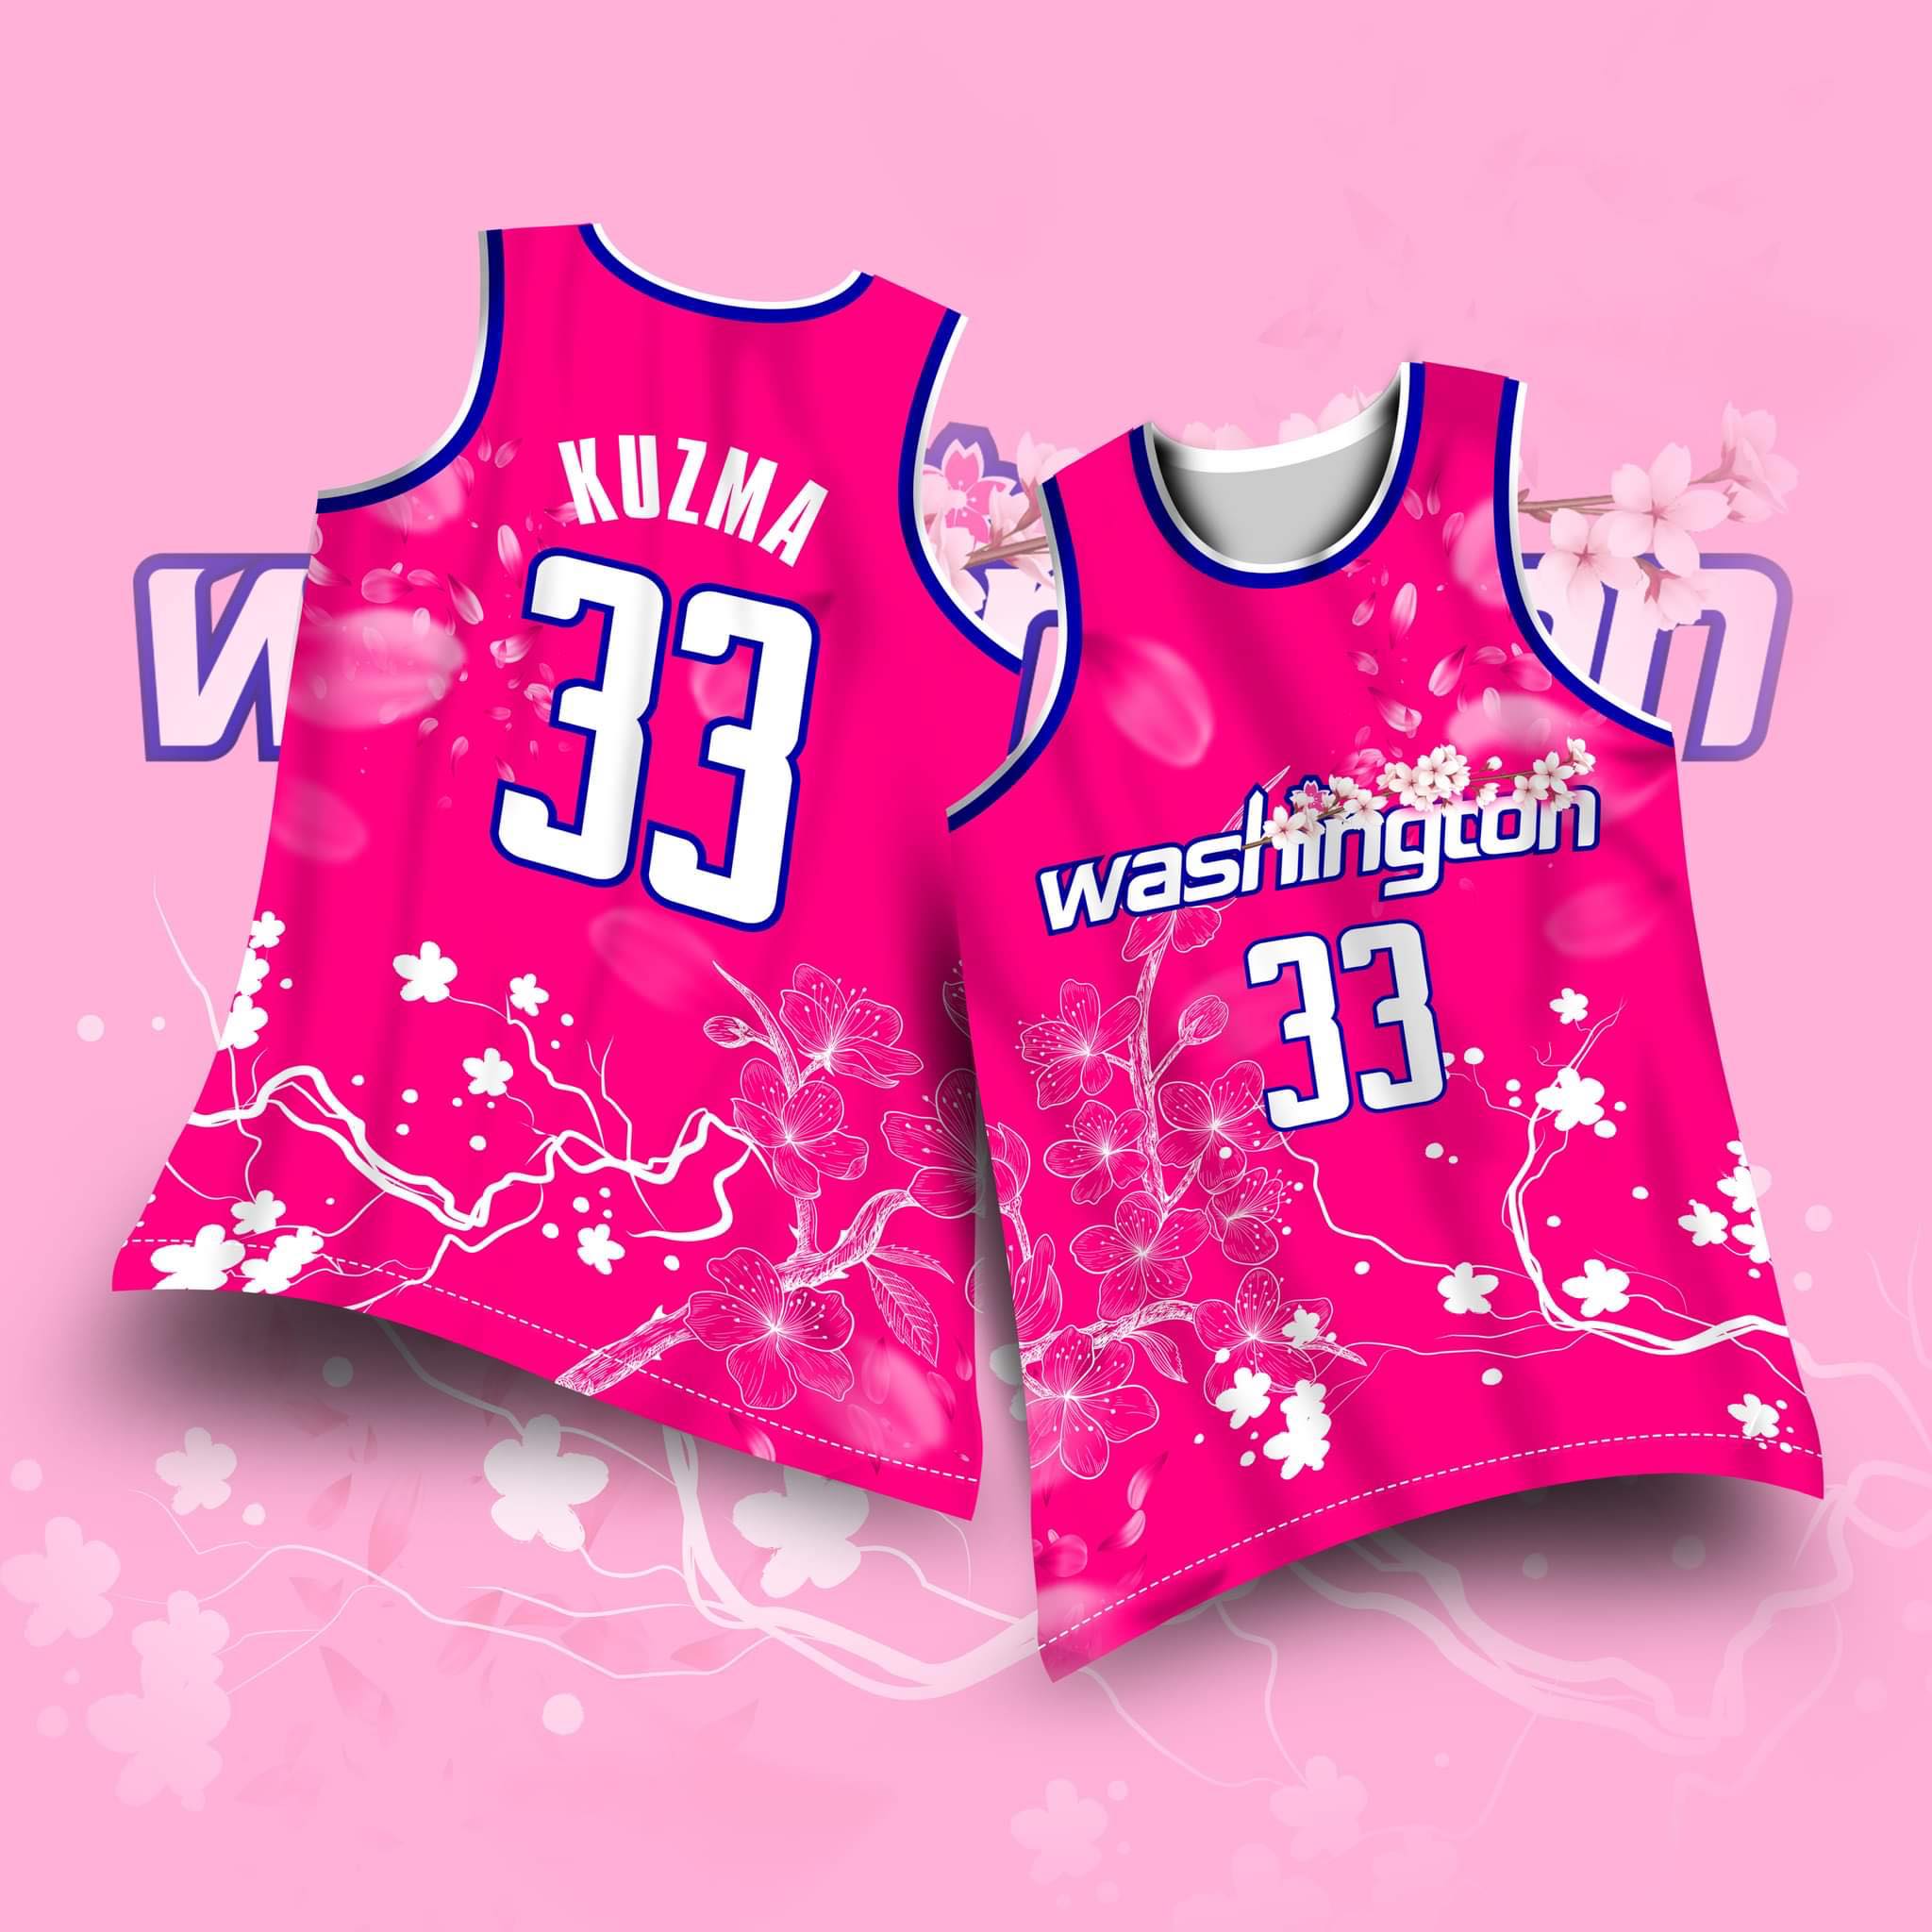 washington pink jersey